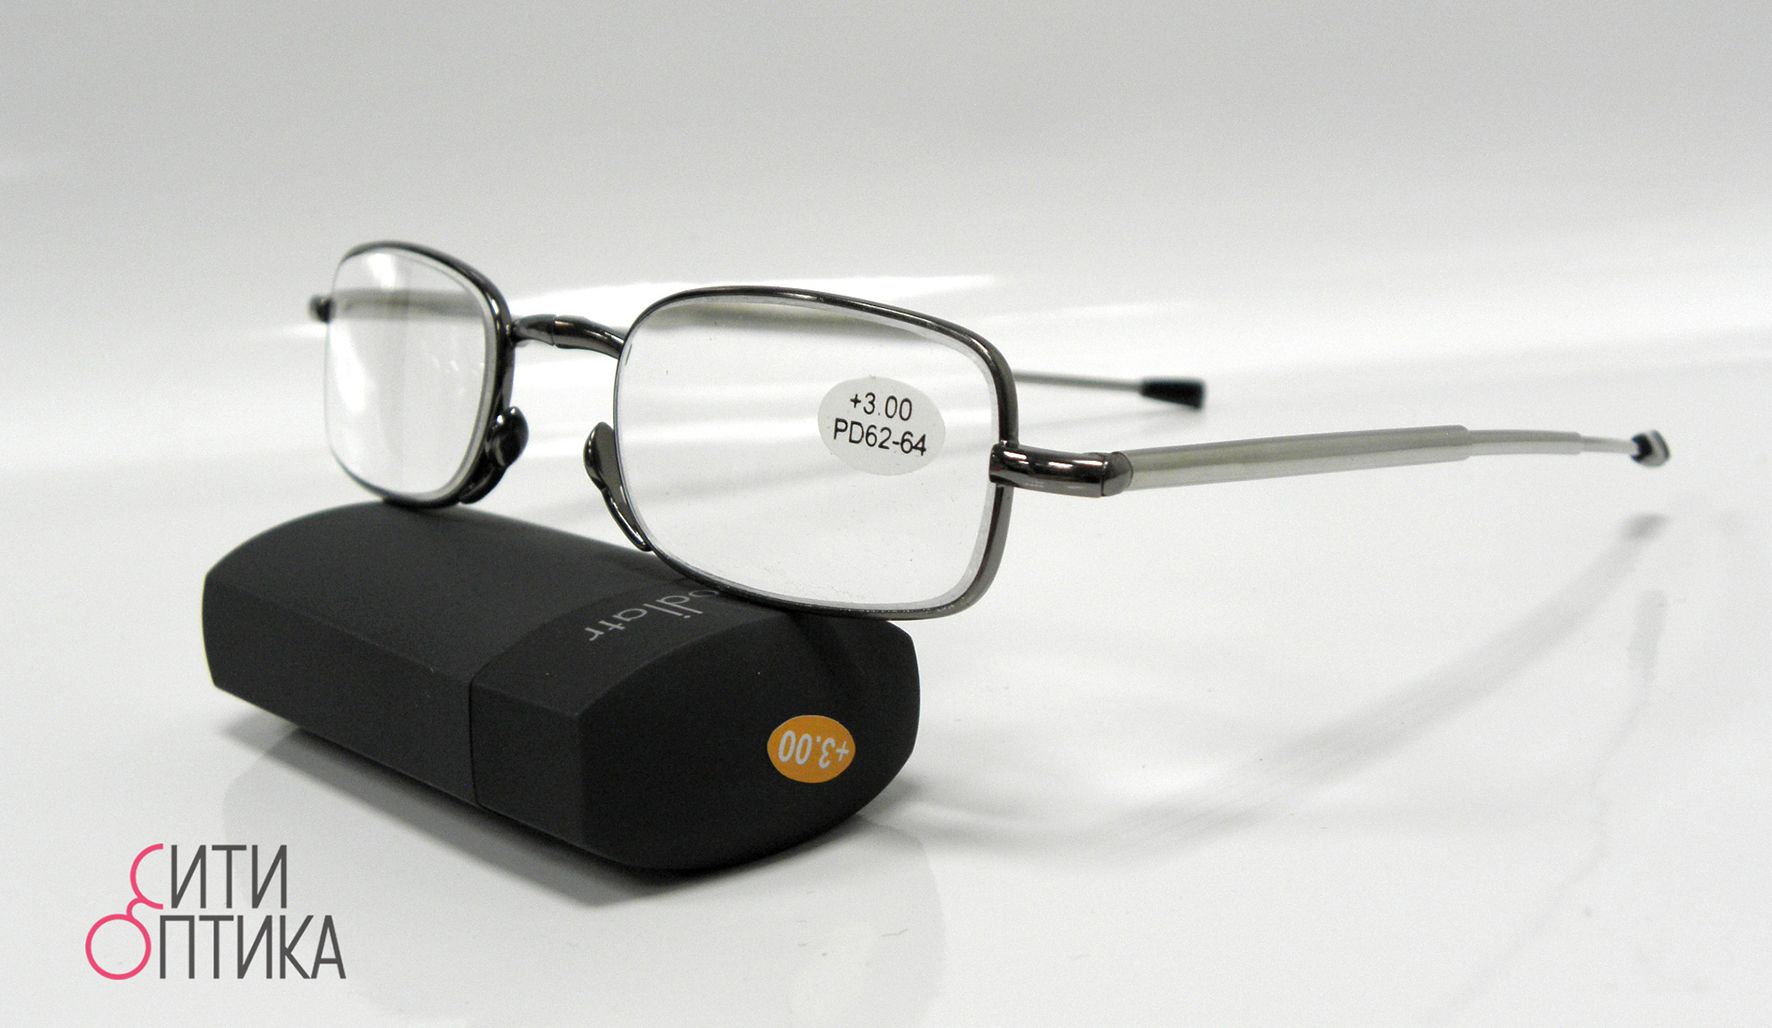 Очки гладиатор. Glodiatr очки g0116. Складные очки с диоптриями в футляре Glodiatr g108. Очки Glodiatr g 1908. Glodiatr очки ci830.